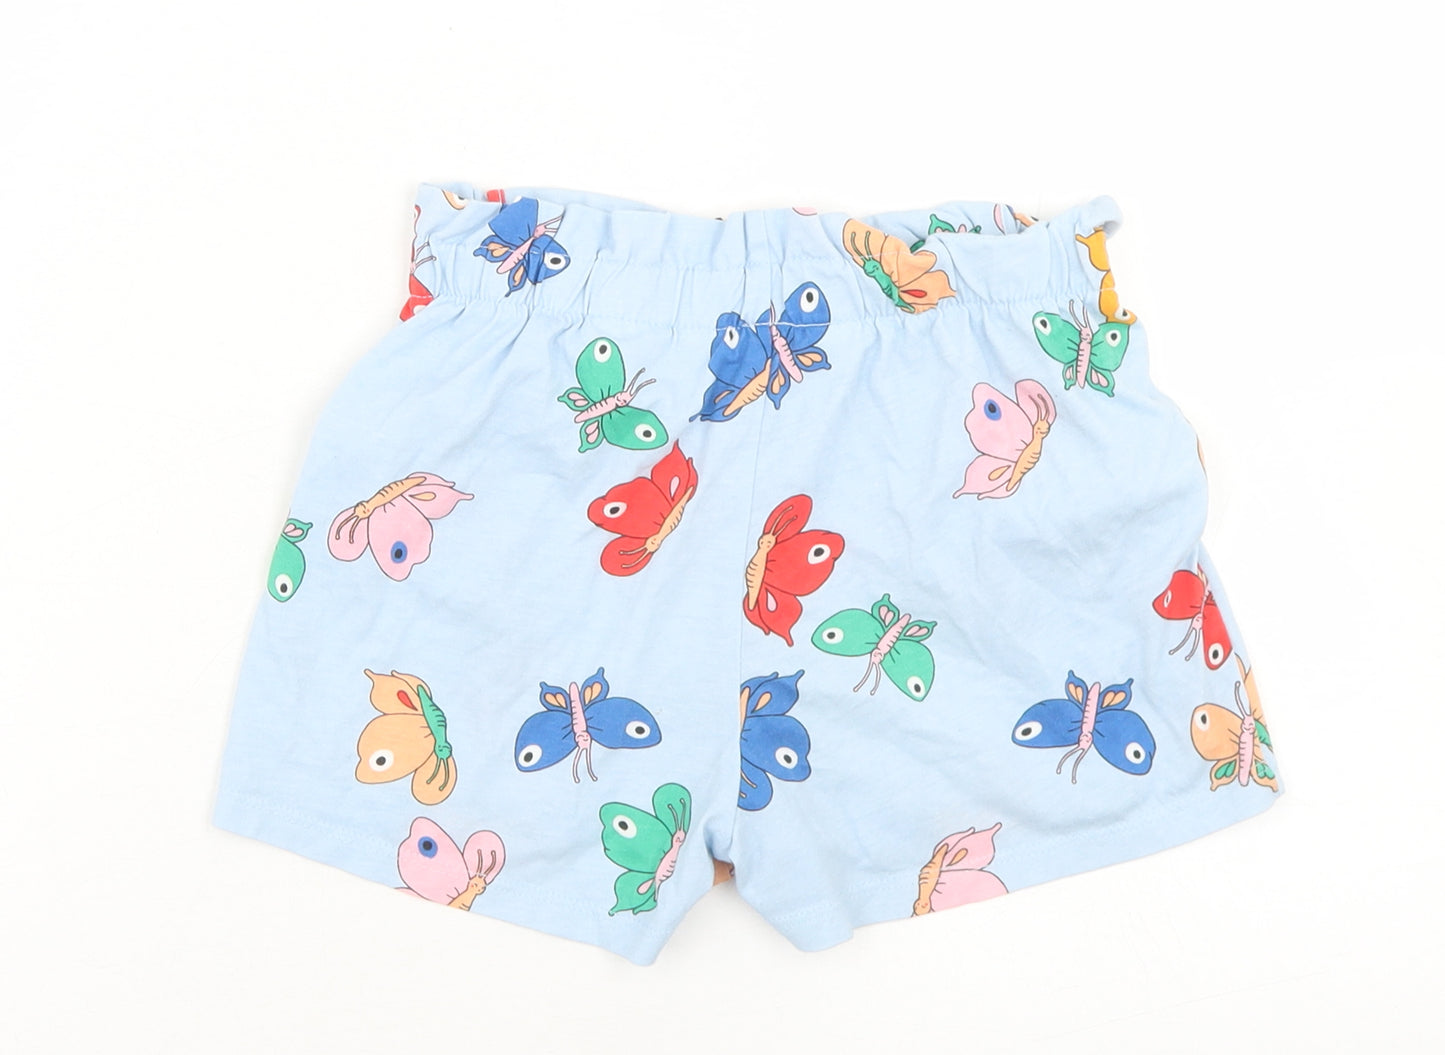 H&M Girls Blue Geometric Cotton Paperbag Shorts Size 5-6 Years  Regular  - Butterfly Print